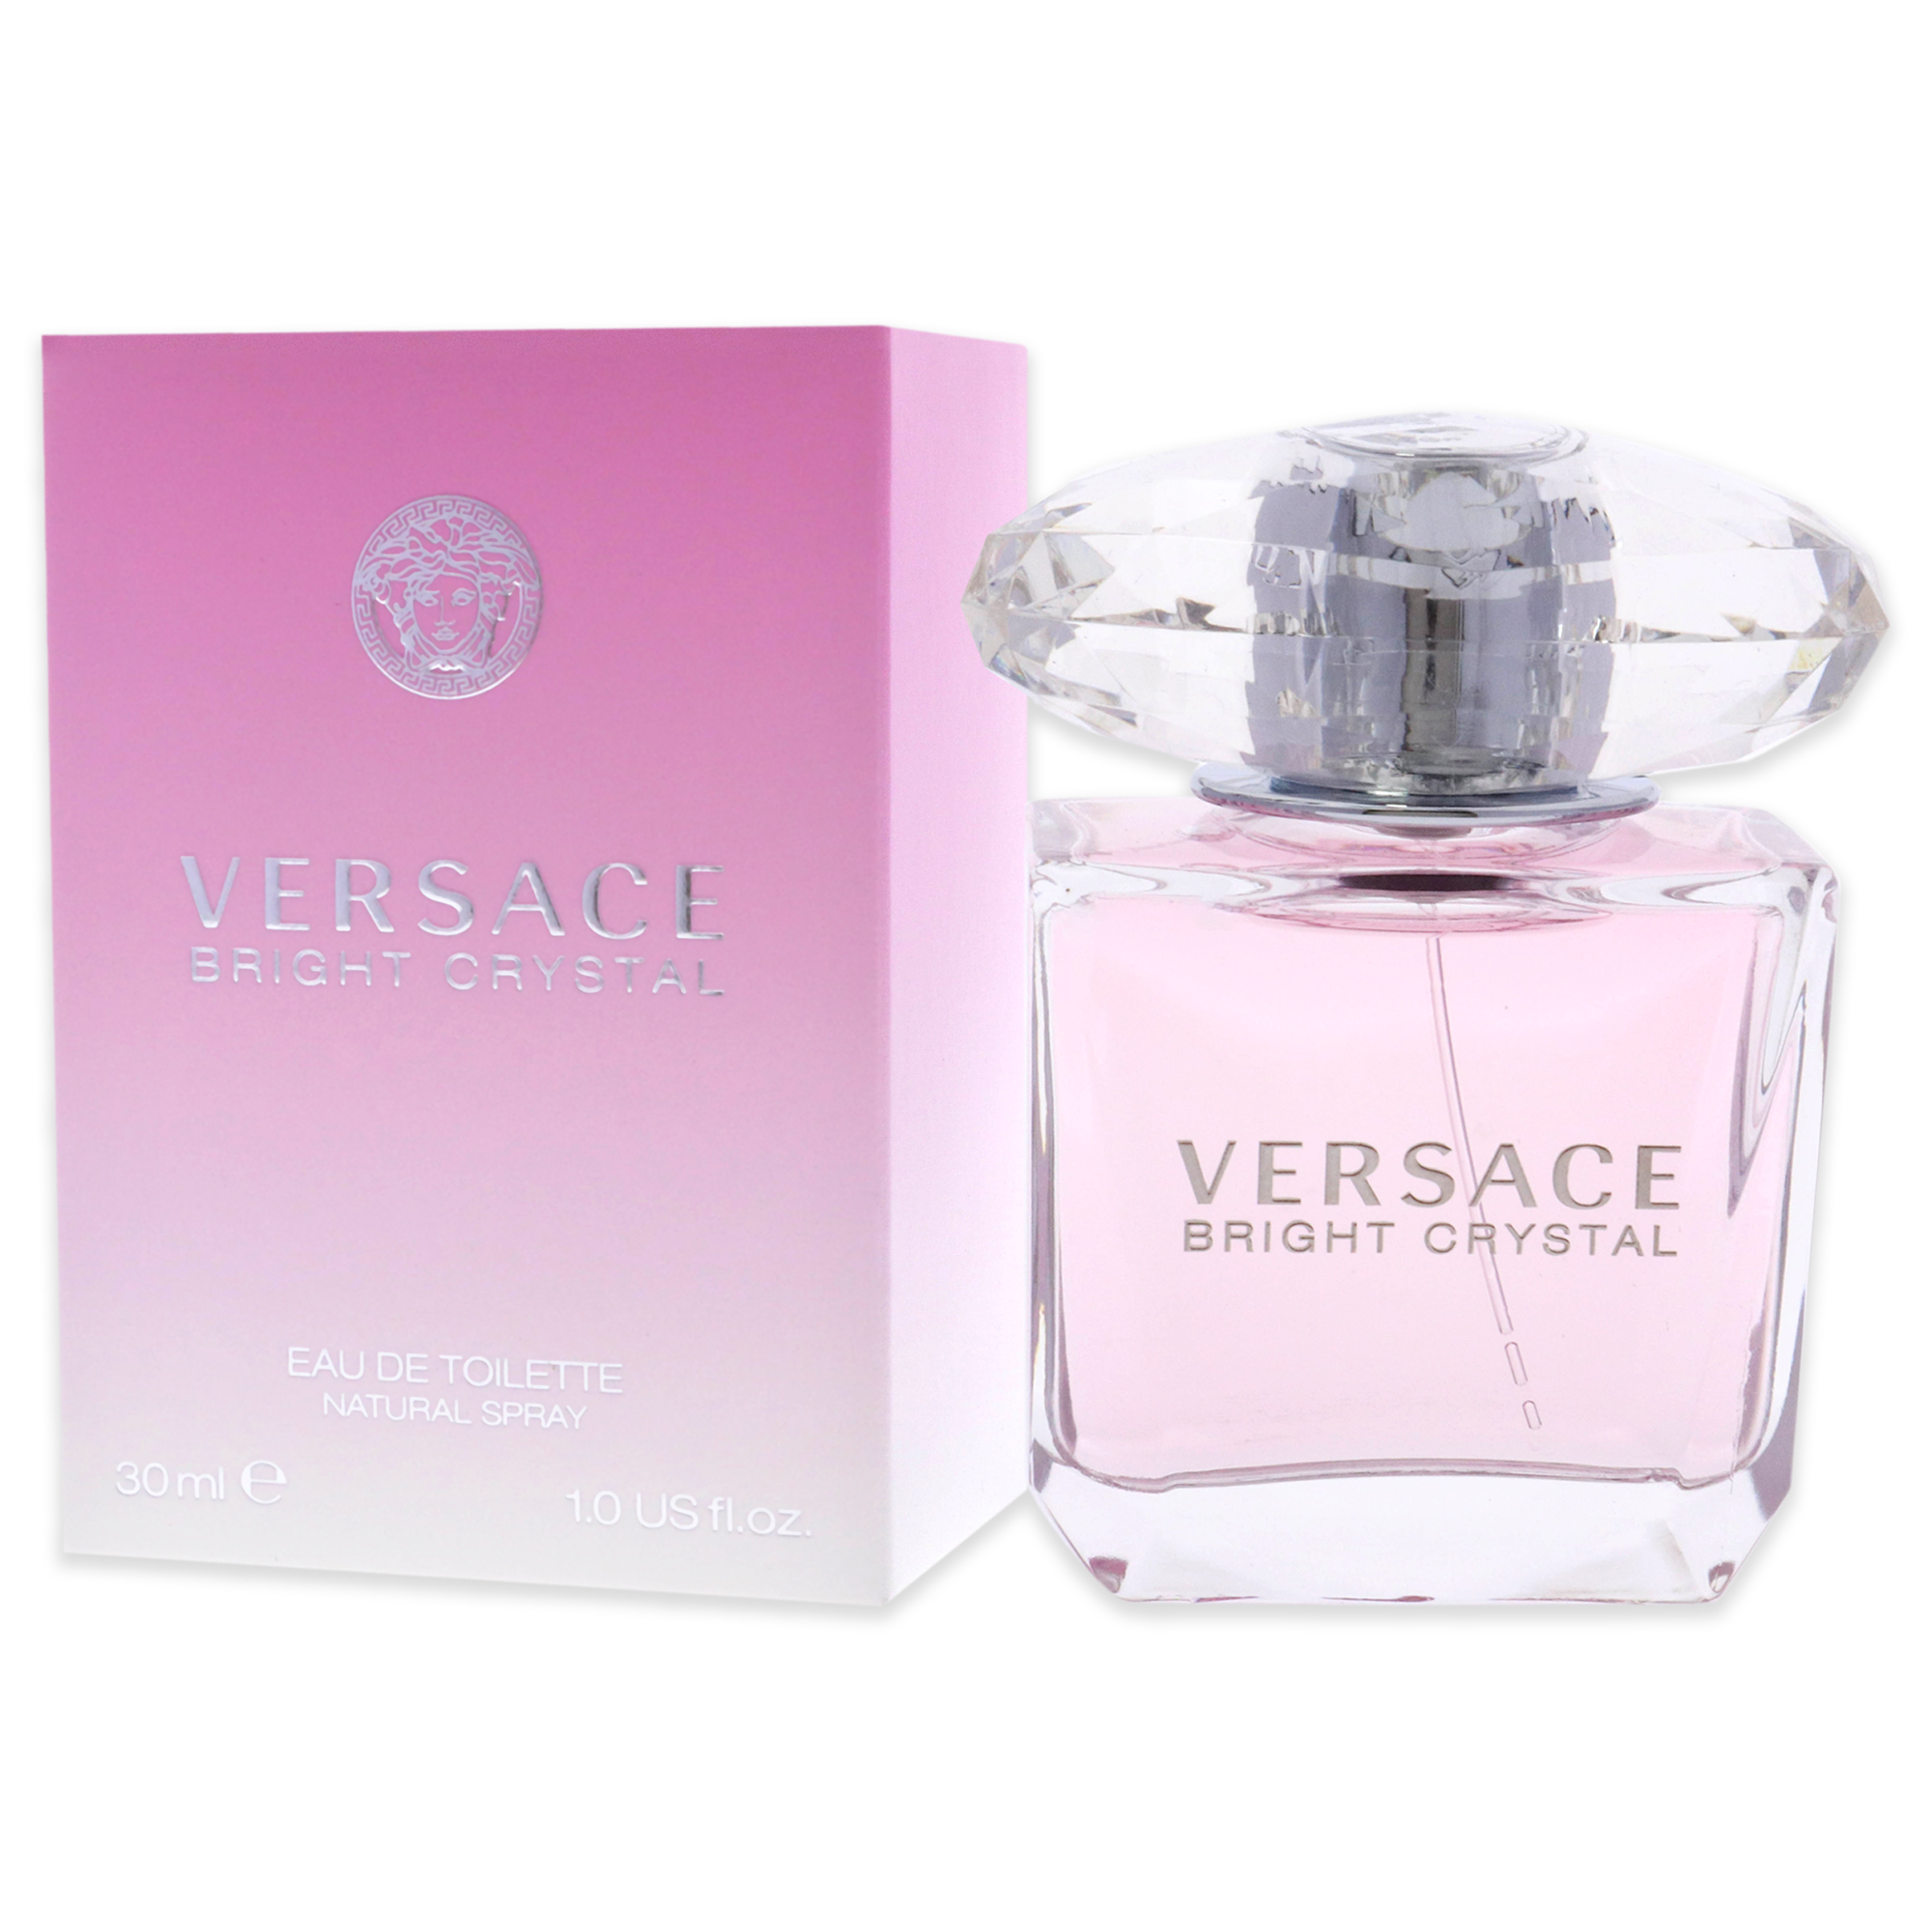 Bright Crystal by Versace Eau De Toilette Spray 1 oz for Women - image 4 of 6